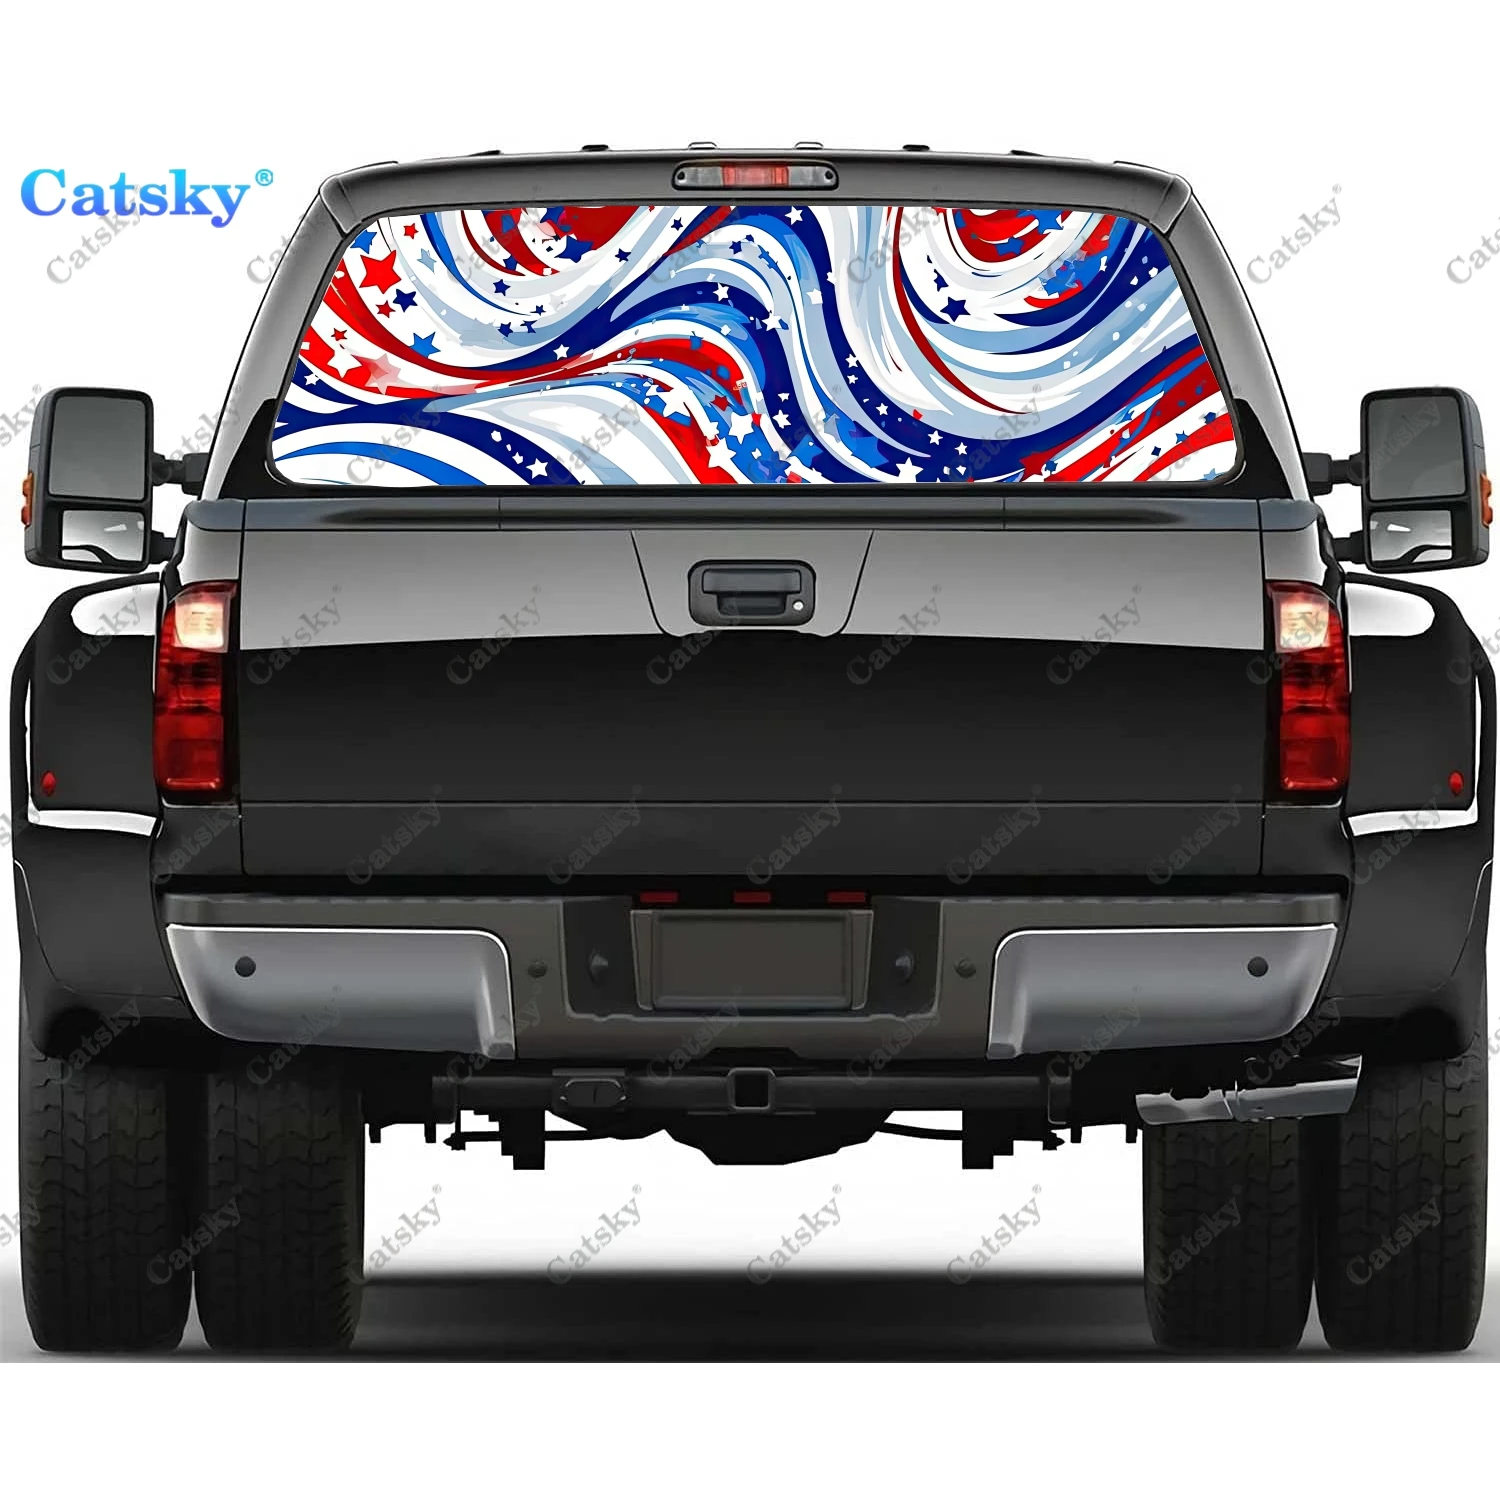 

American Flag Splatter Splash Rear Window Decal Fit Pickup,Truck,Car Universal See Through Perforated Back Windows Vinyl Sticker